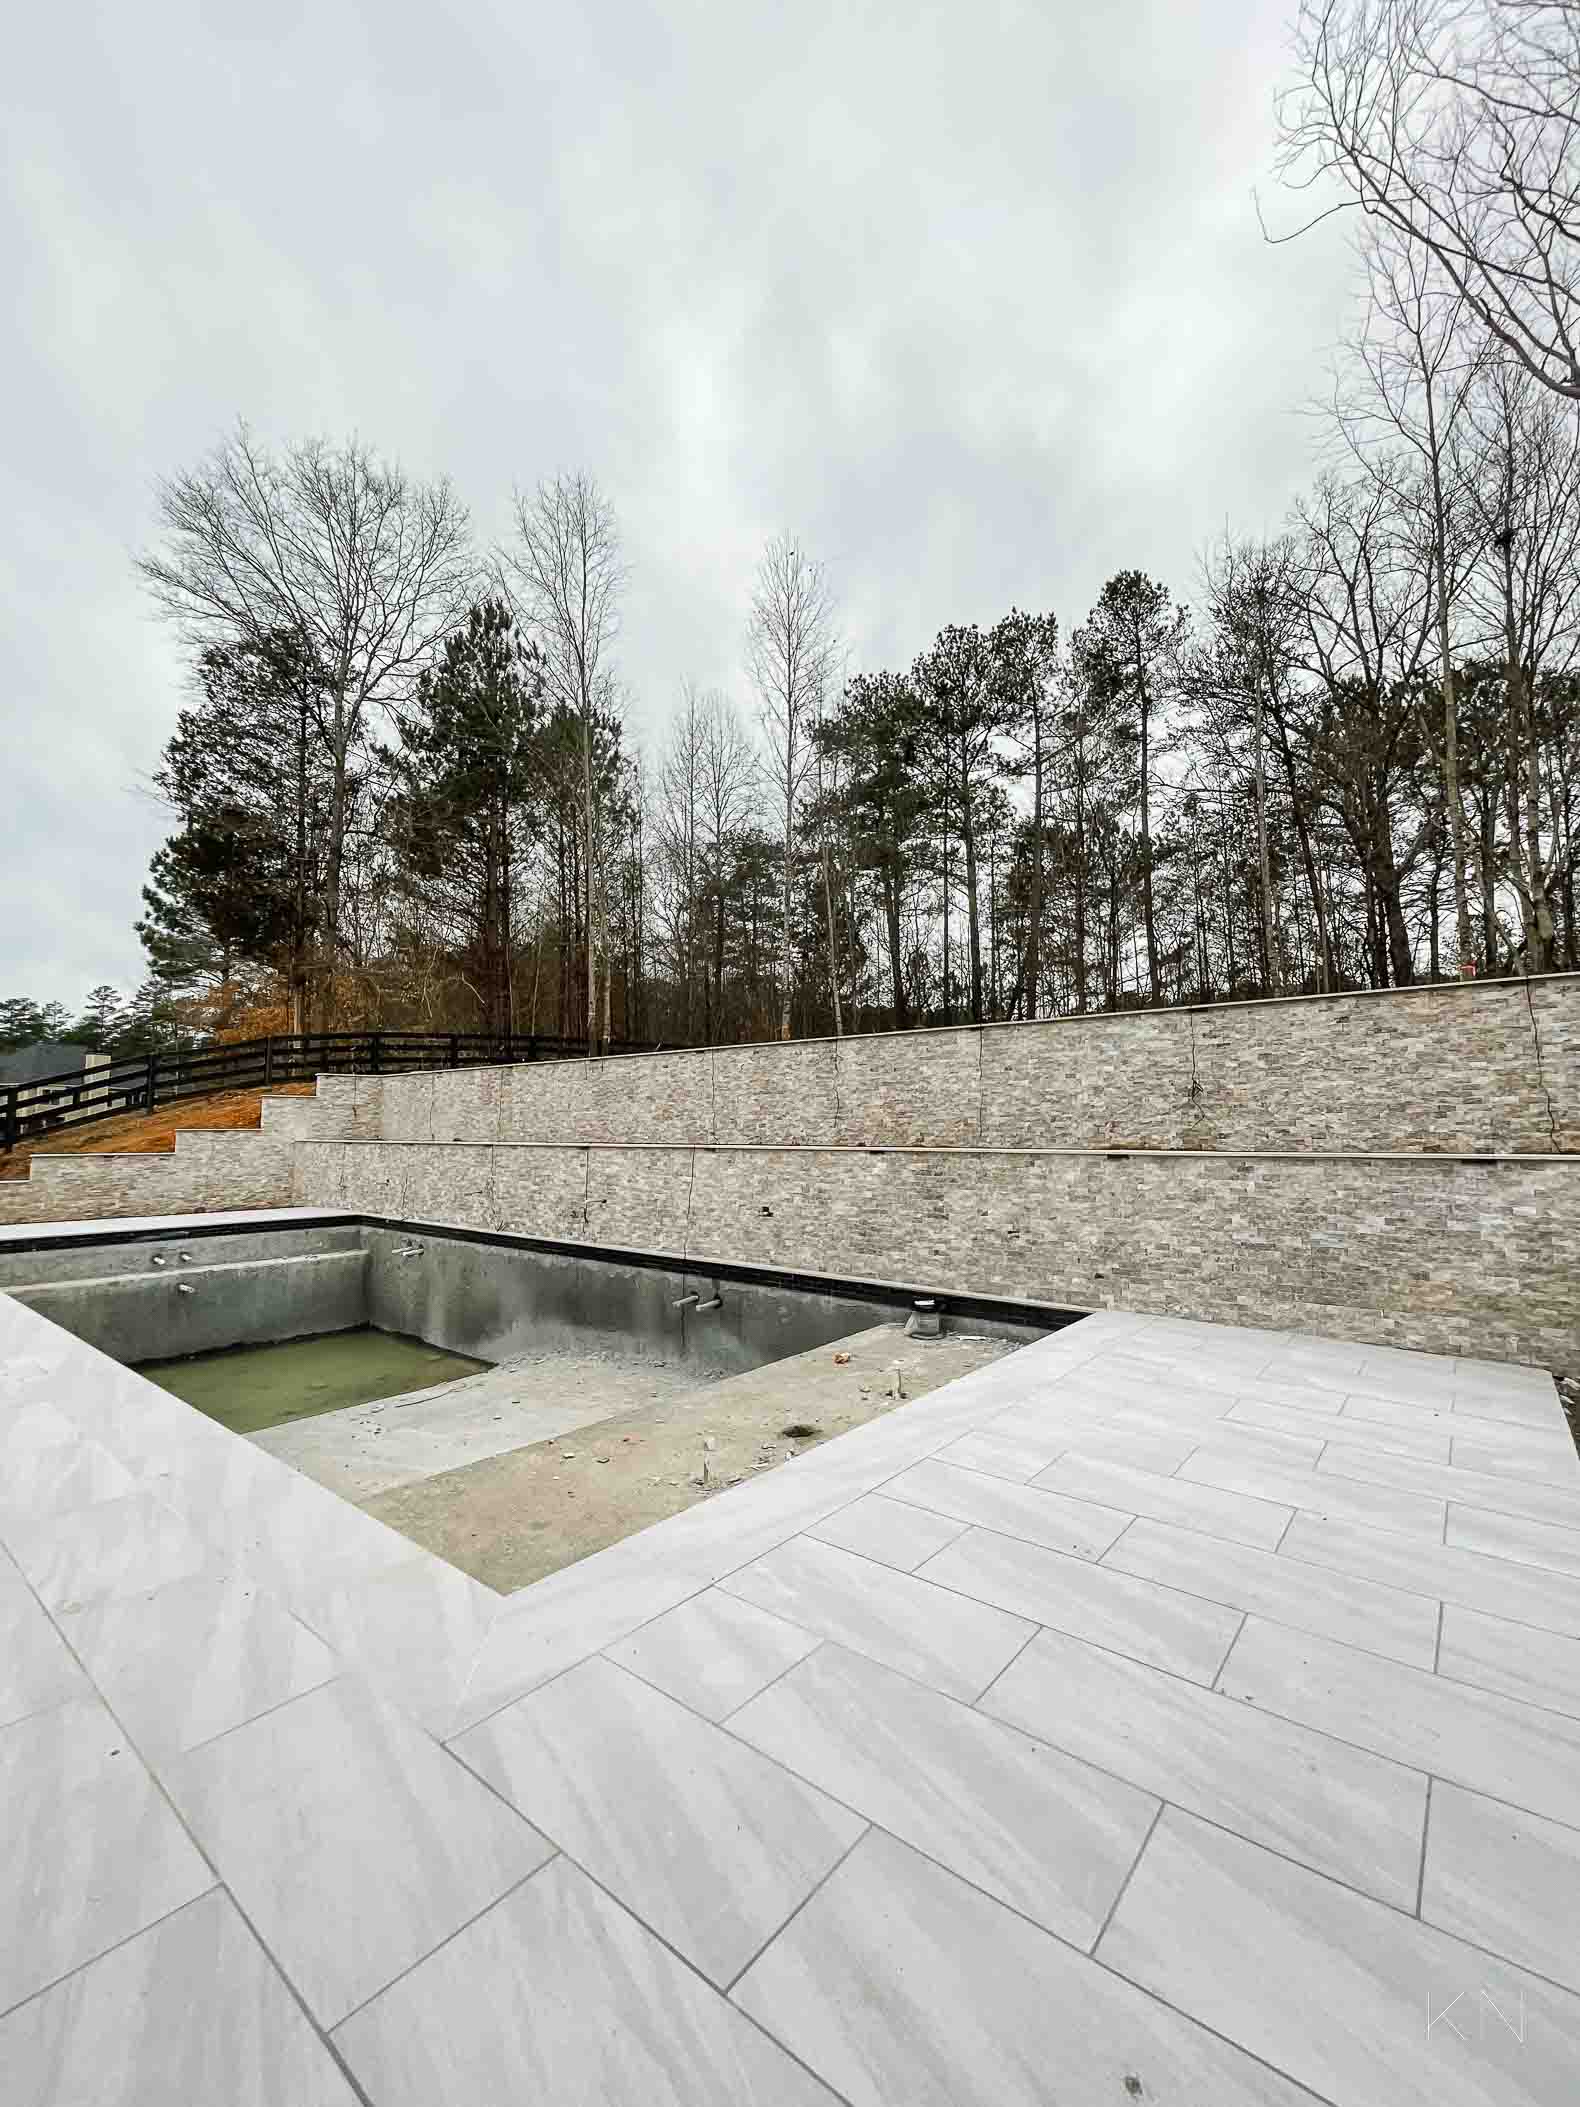 Concrete Pool Building Progress with Retaining Walls